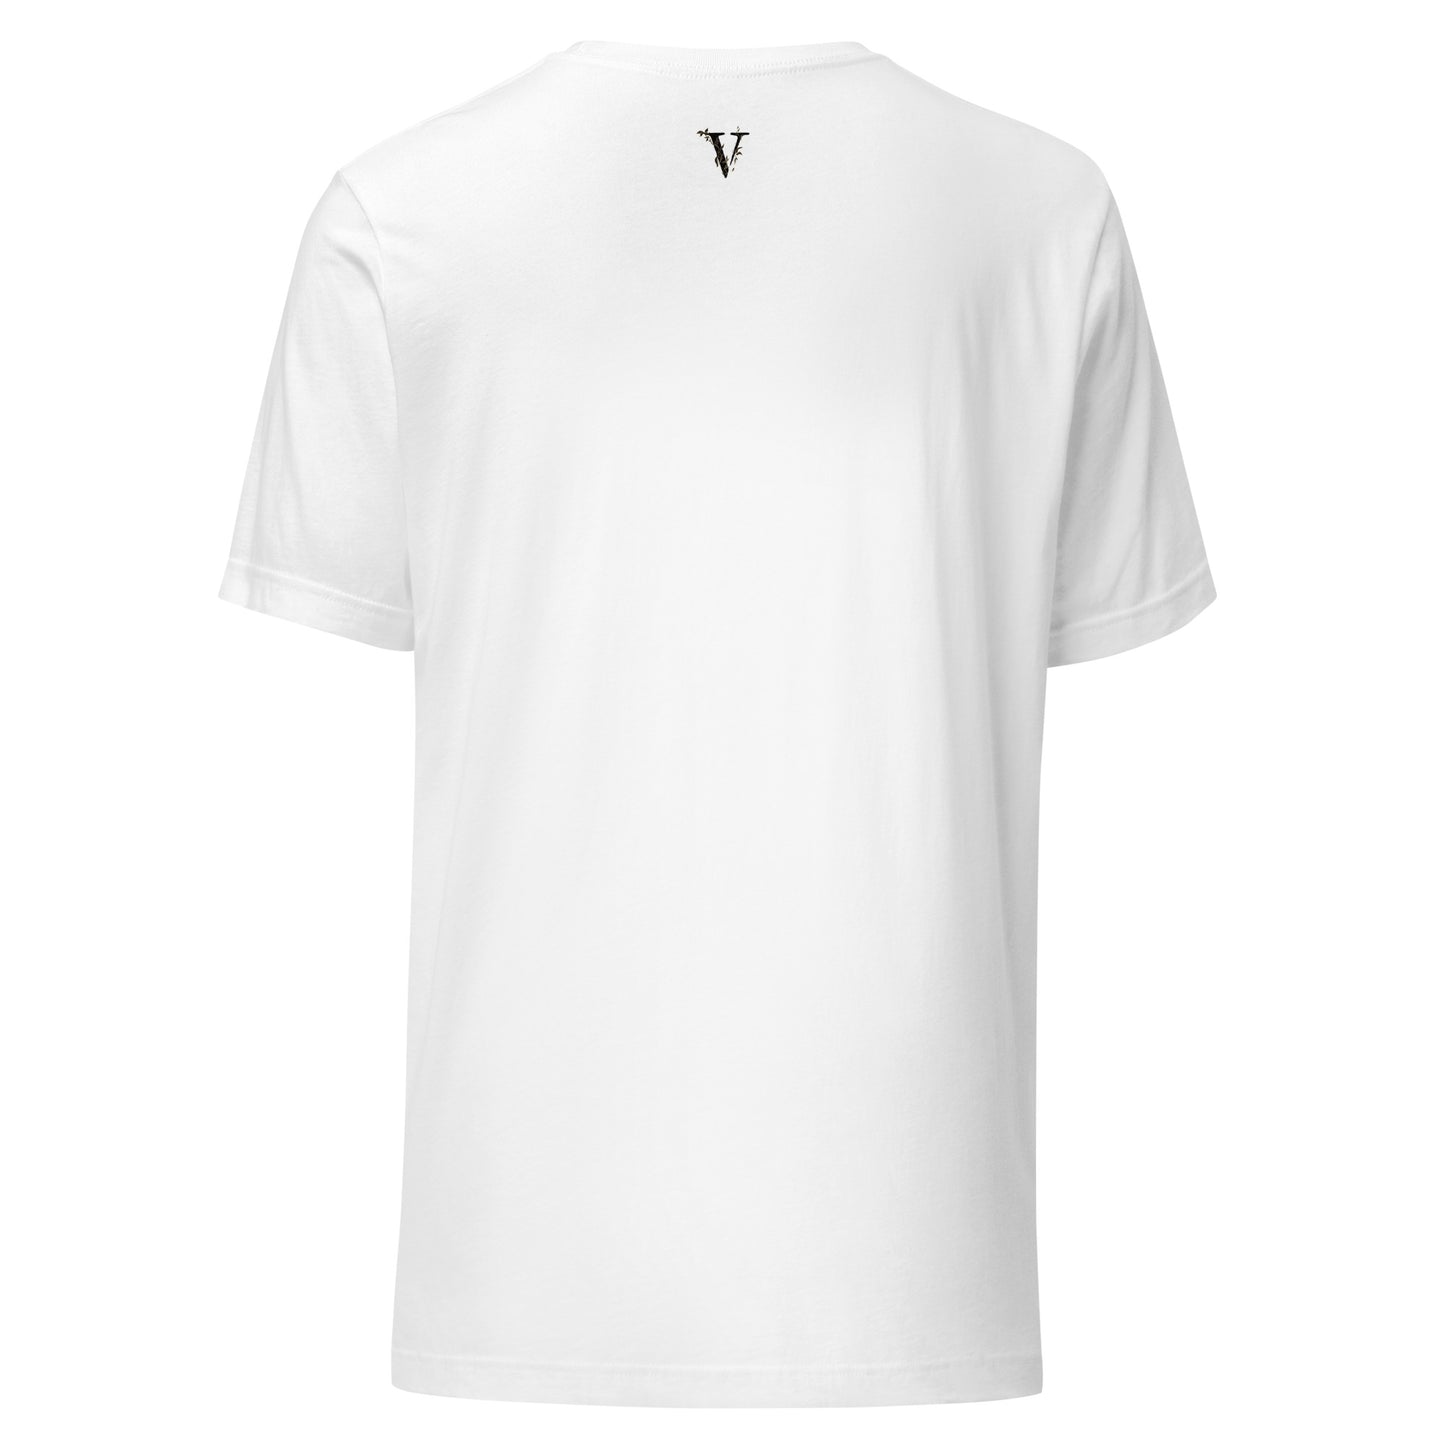 T-shirt LA PAPESSE II - Blanc